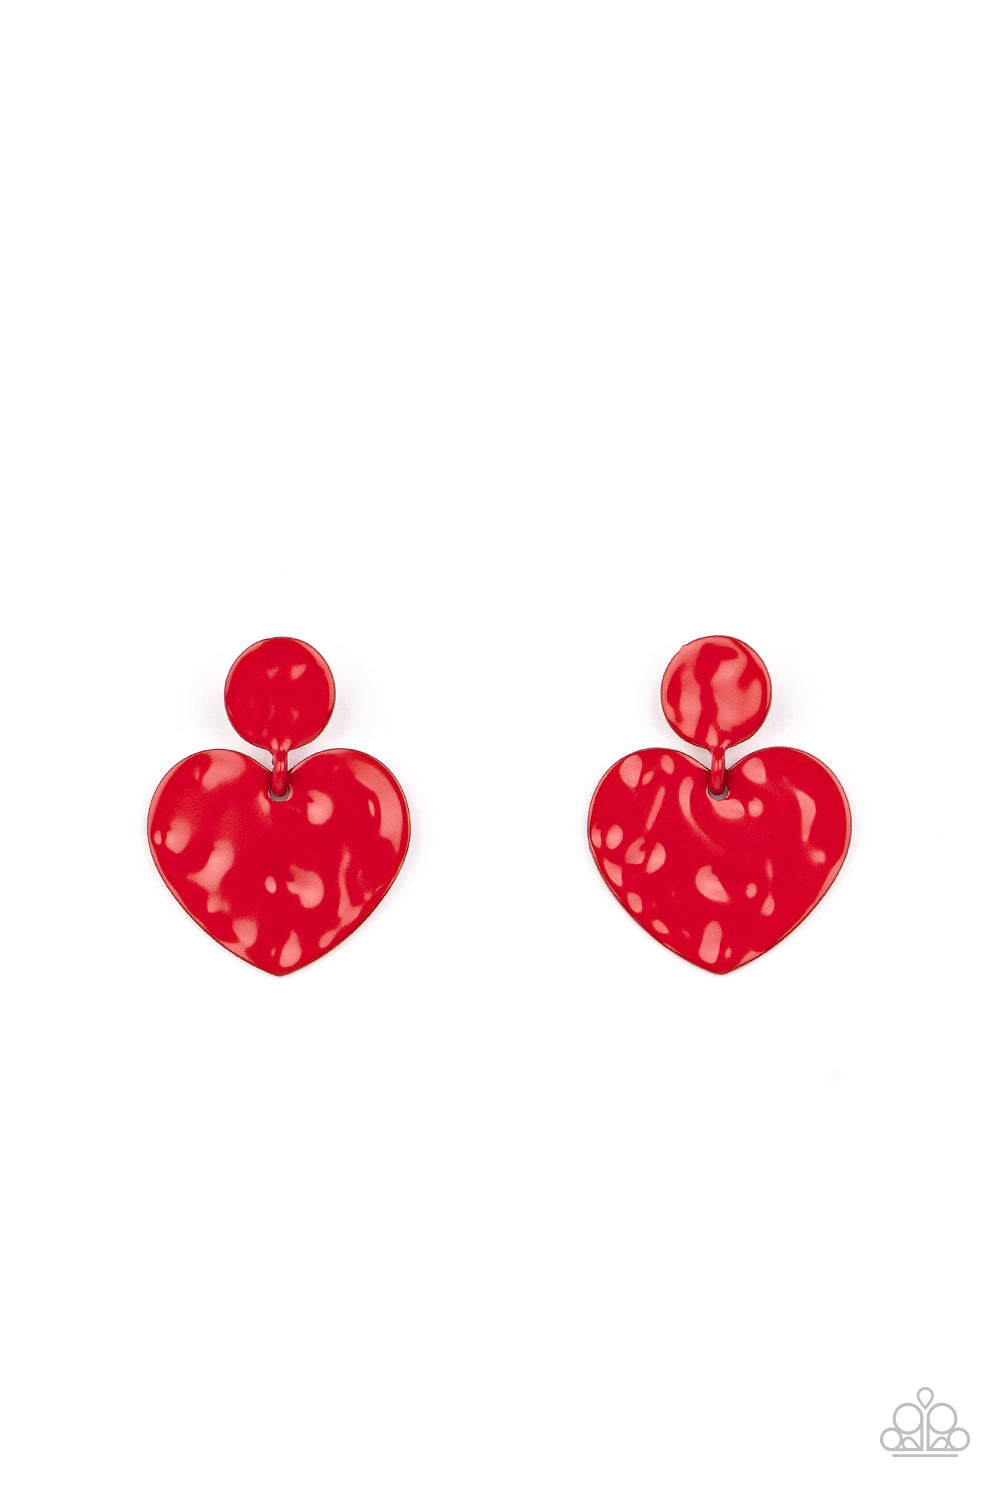 Paparazzi - Just a Little Crush - Red Earrings - Alies Bling Bar